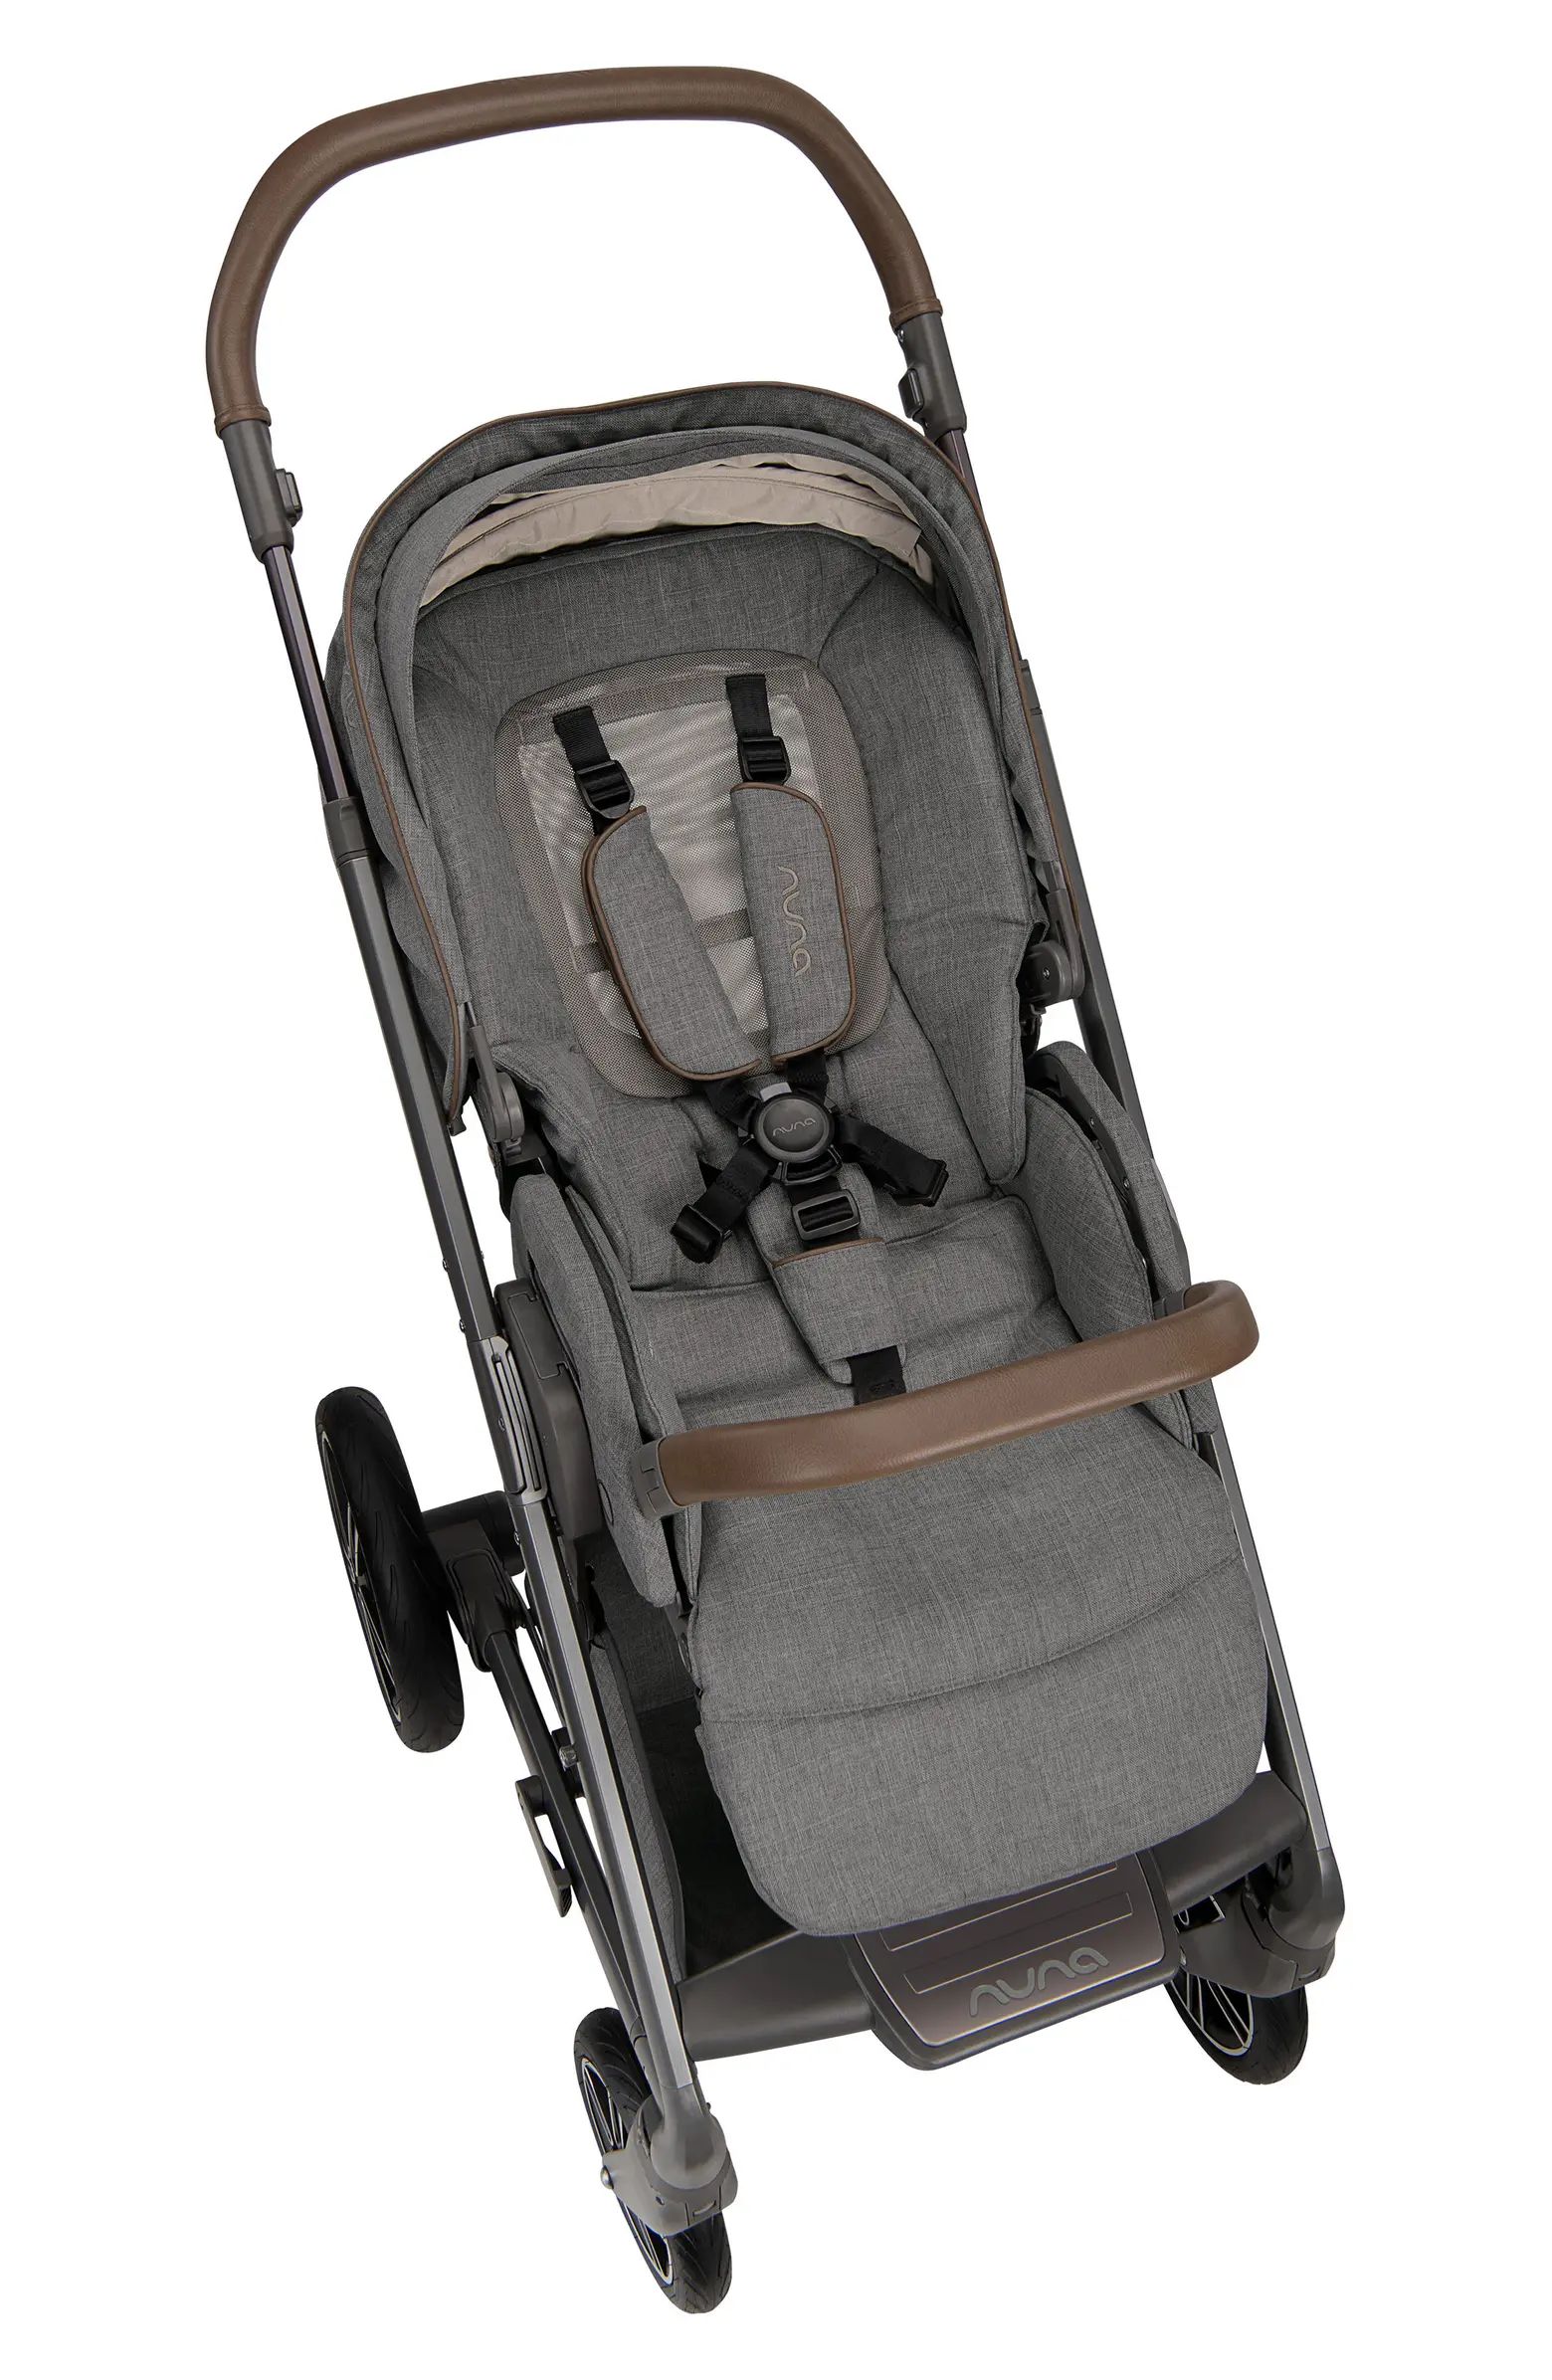 MIXX™ next Refined Collection Stroller & Sling Bag Set | Nordstrom